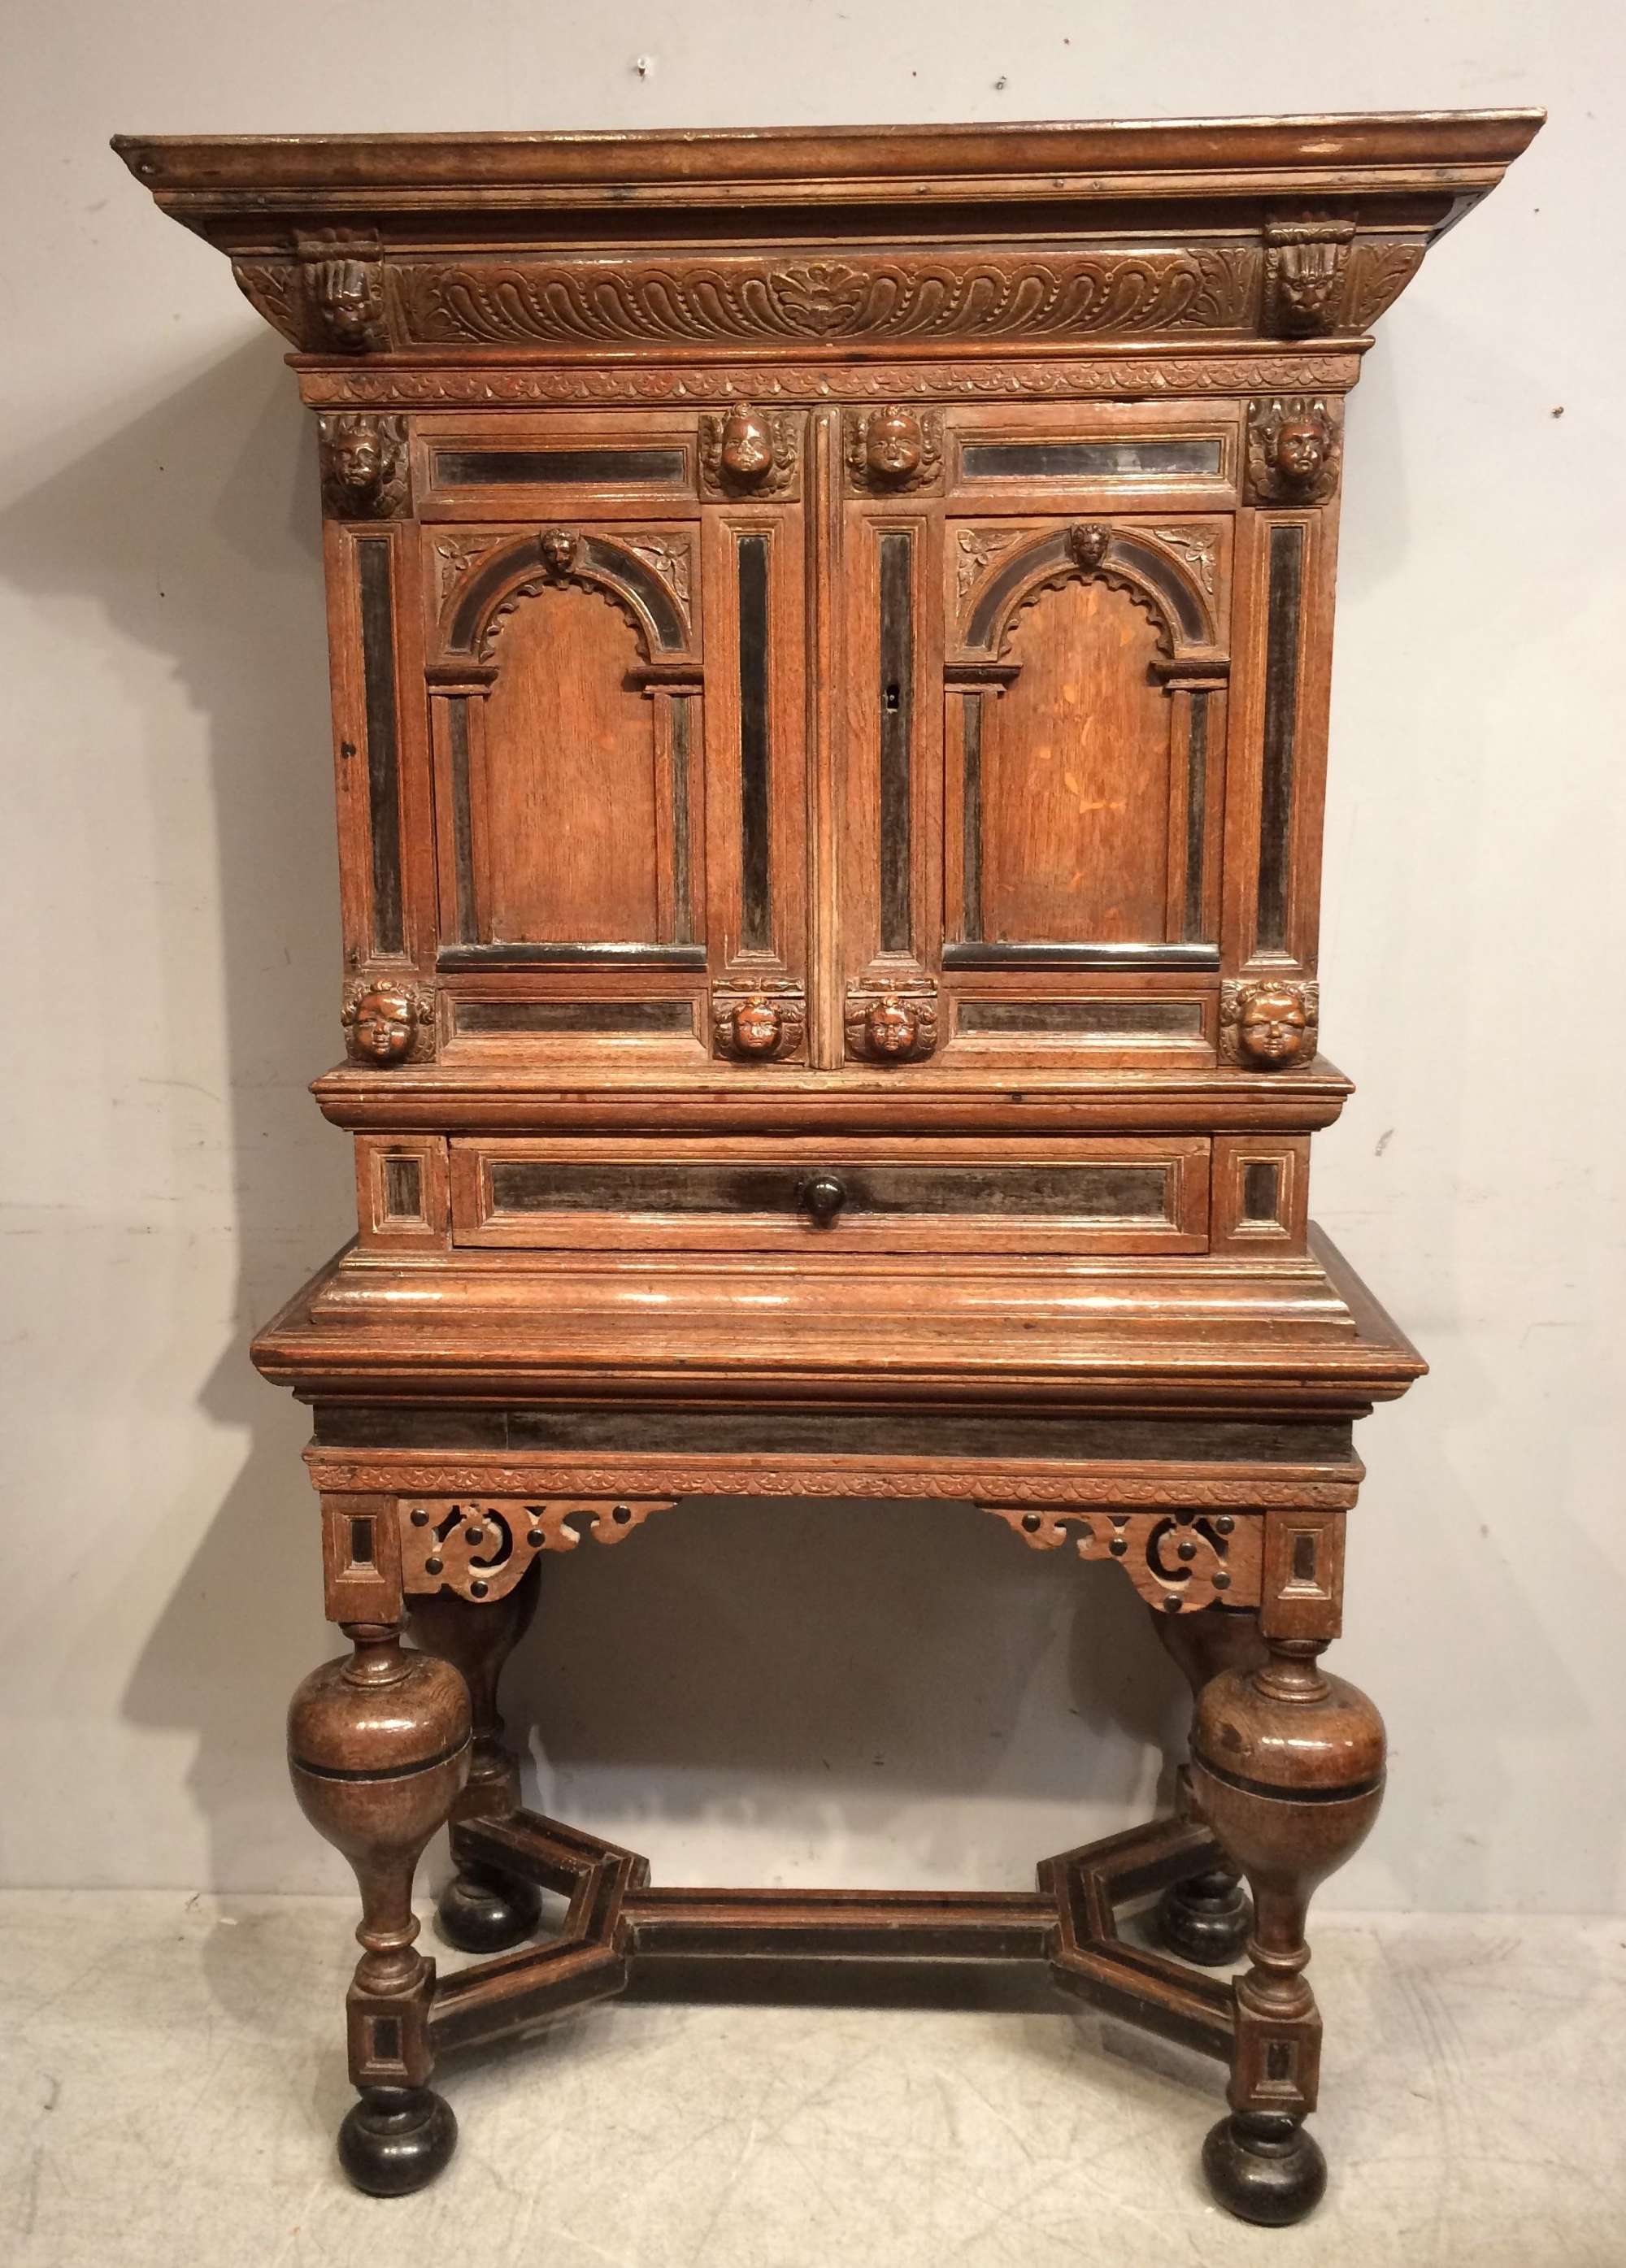 17th century antique Flemish oak cabinet on stand.